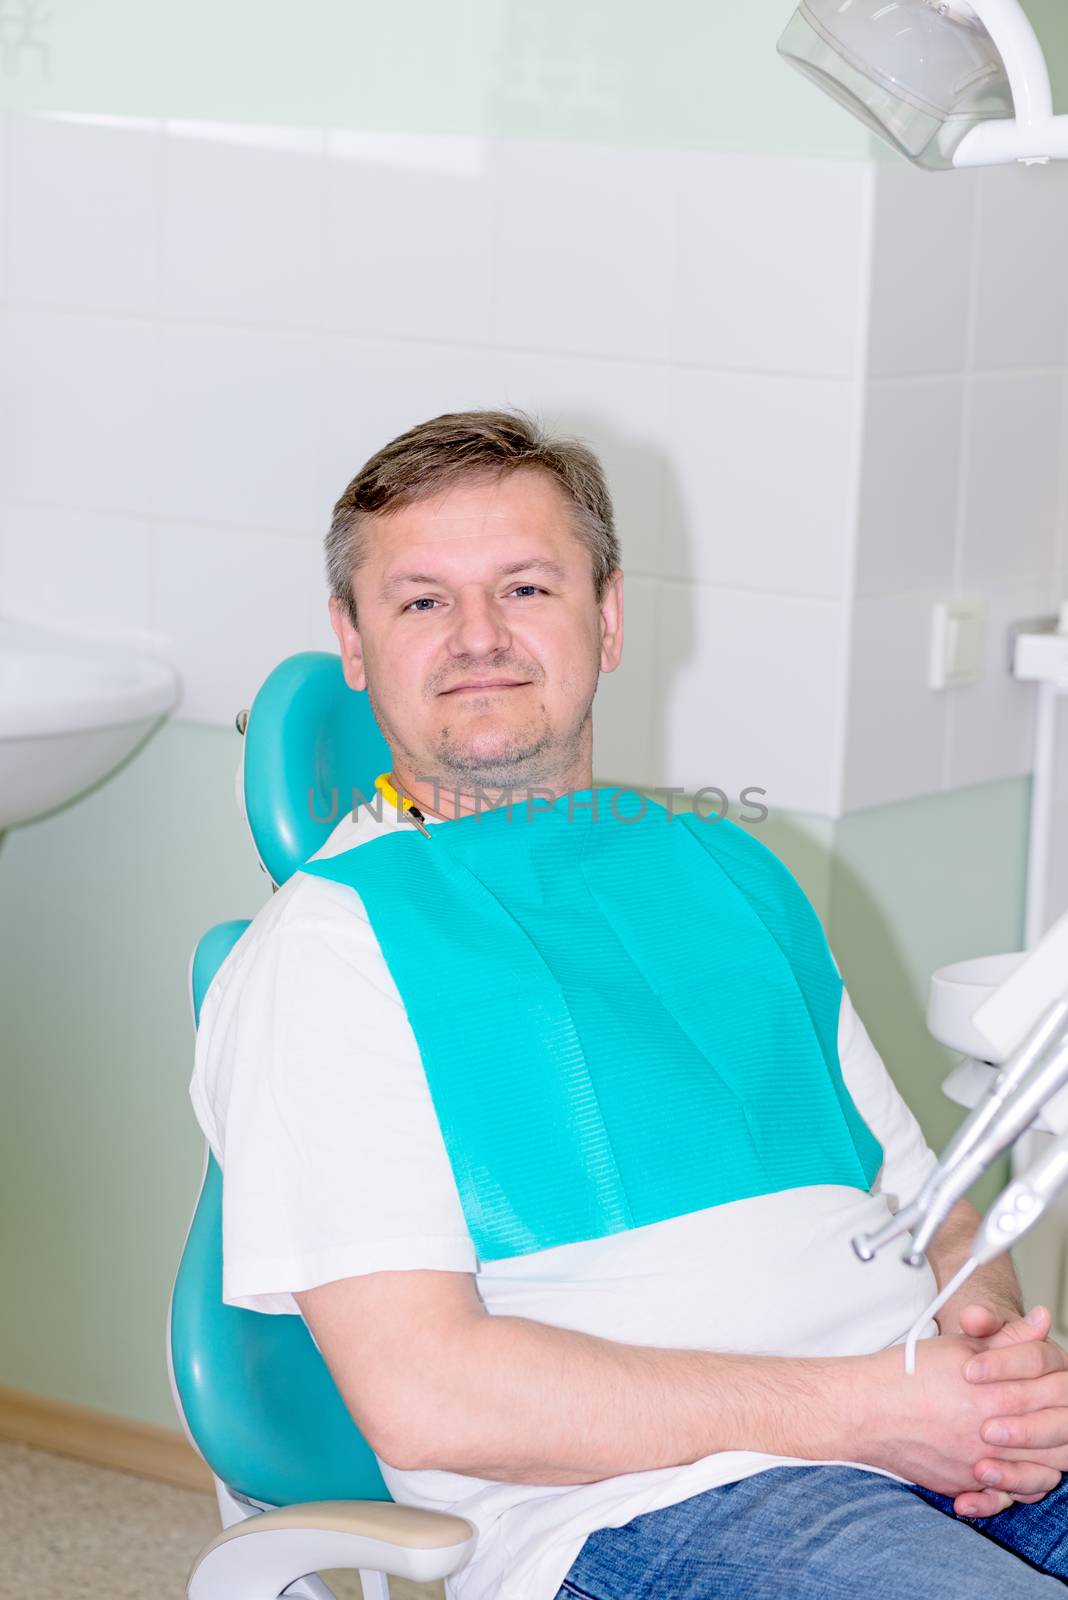 Portrait of a man in dentist office